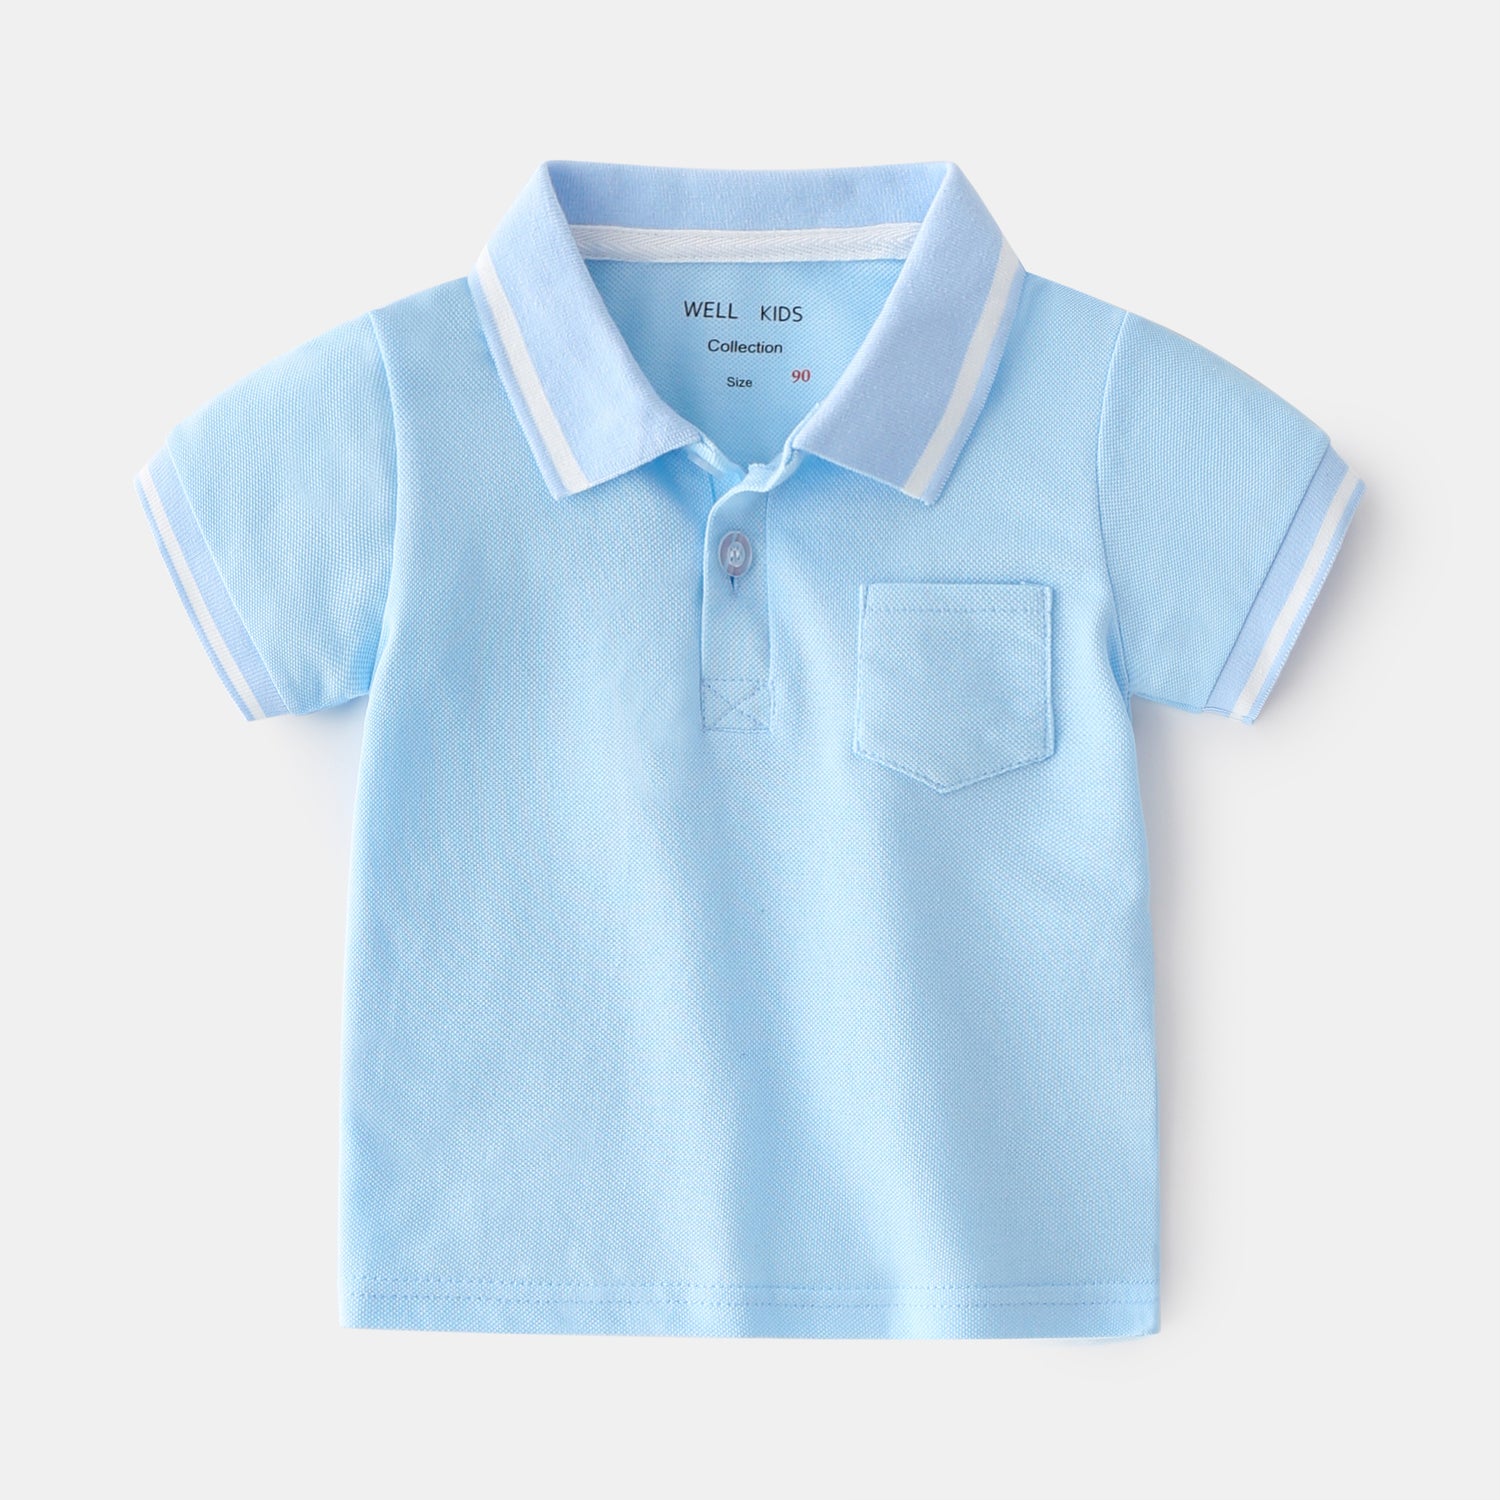 [513126] - Atasan Kaos Polo Fashion Anak Import - Motif Plain Color